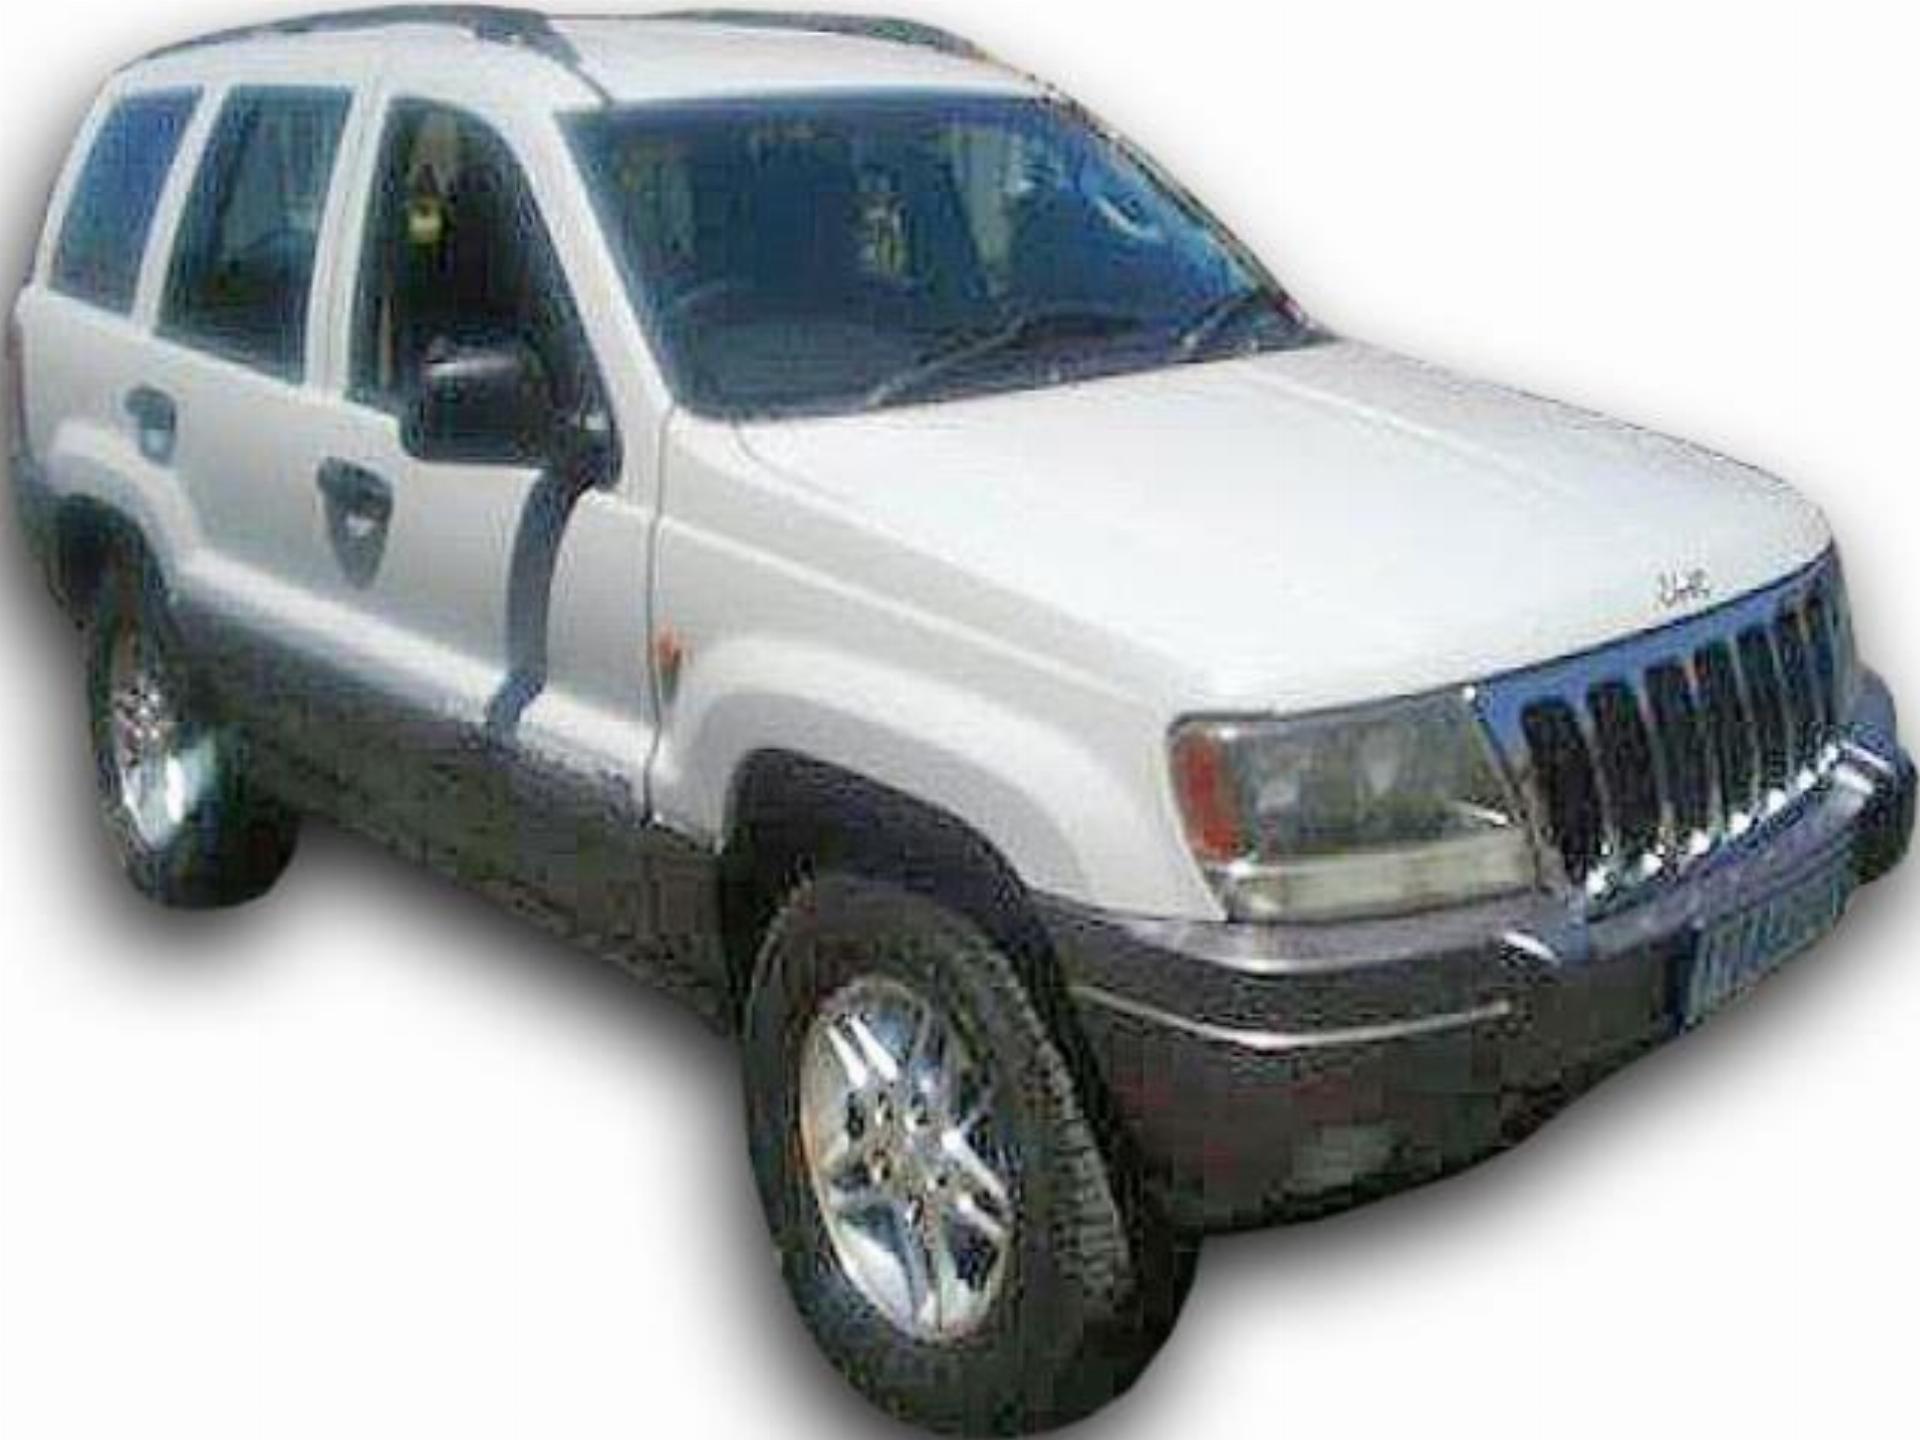 Used Jeep Grand Cherokee Lerado 4.0 4X4 2002 on auction